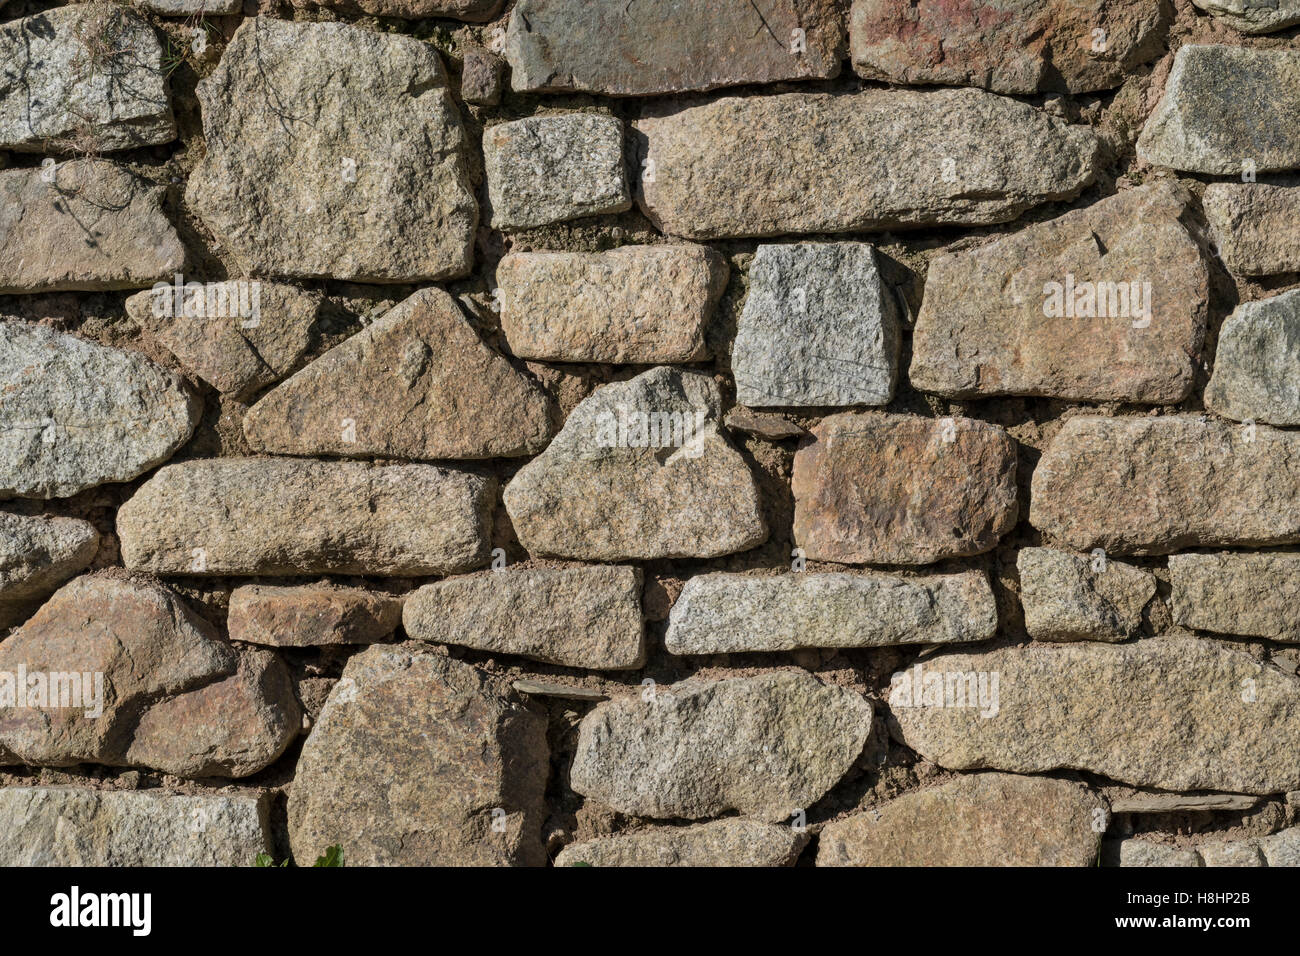 Section of stone wall with neatly interlocking stones & irregular stonework. For UK construction sector. Stock Photo